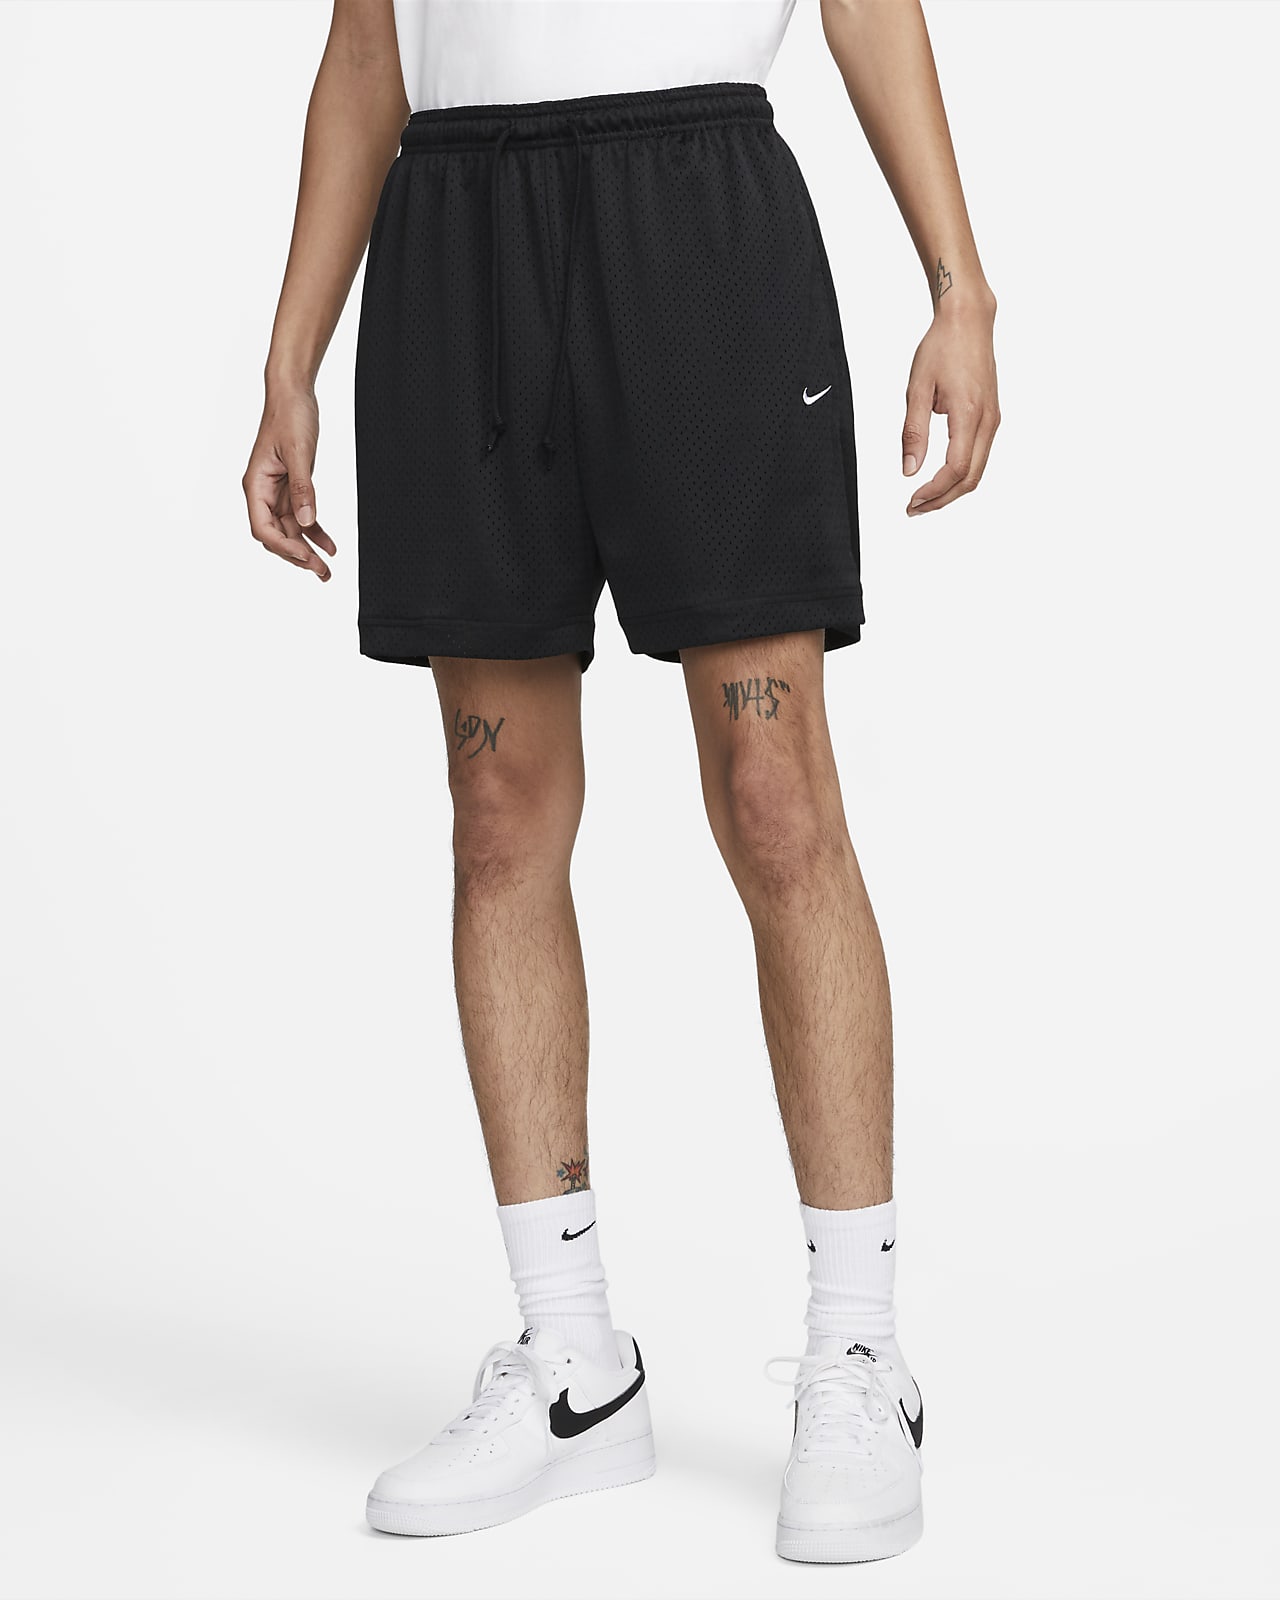 Nike Authentics Men's Practice Shorts